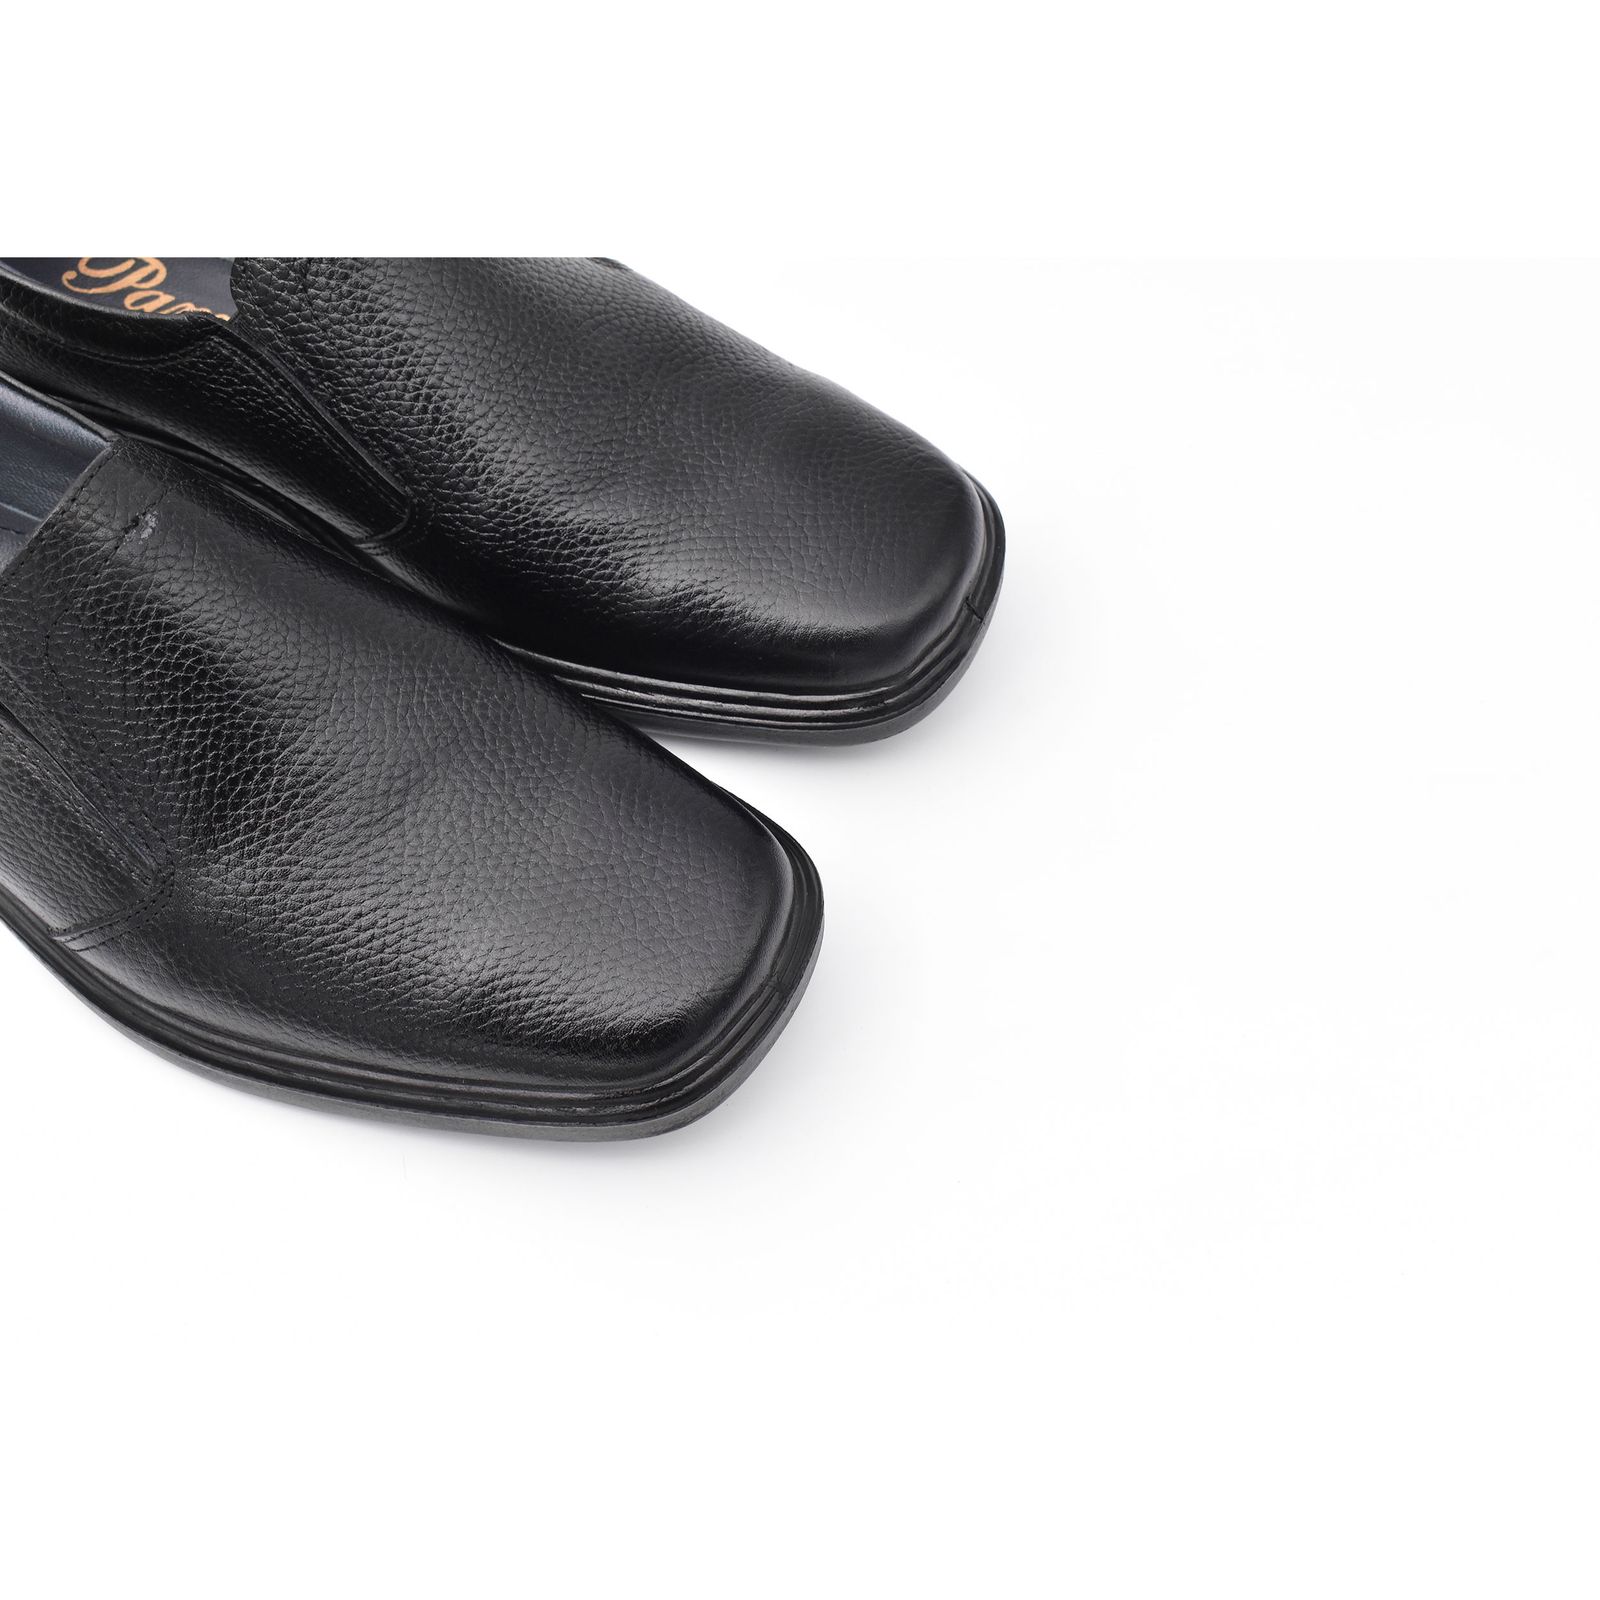 کفش مردانه پاما مدل SHK کد G1172 -  - 3